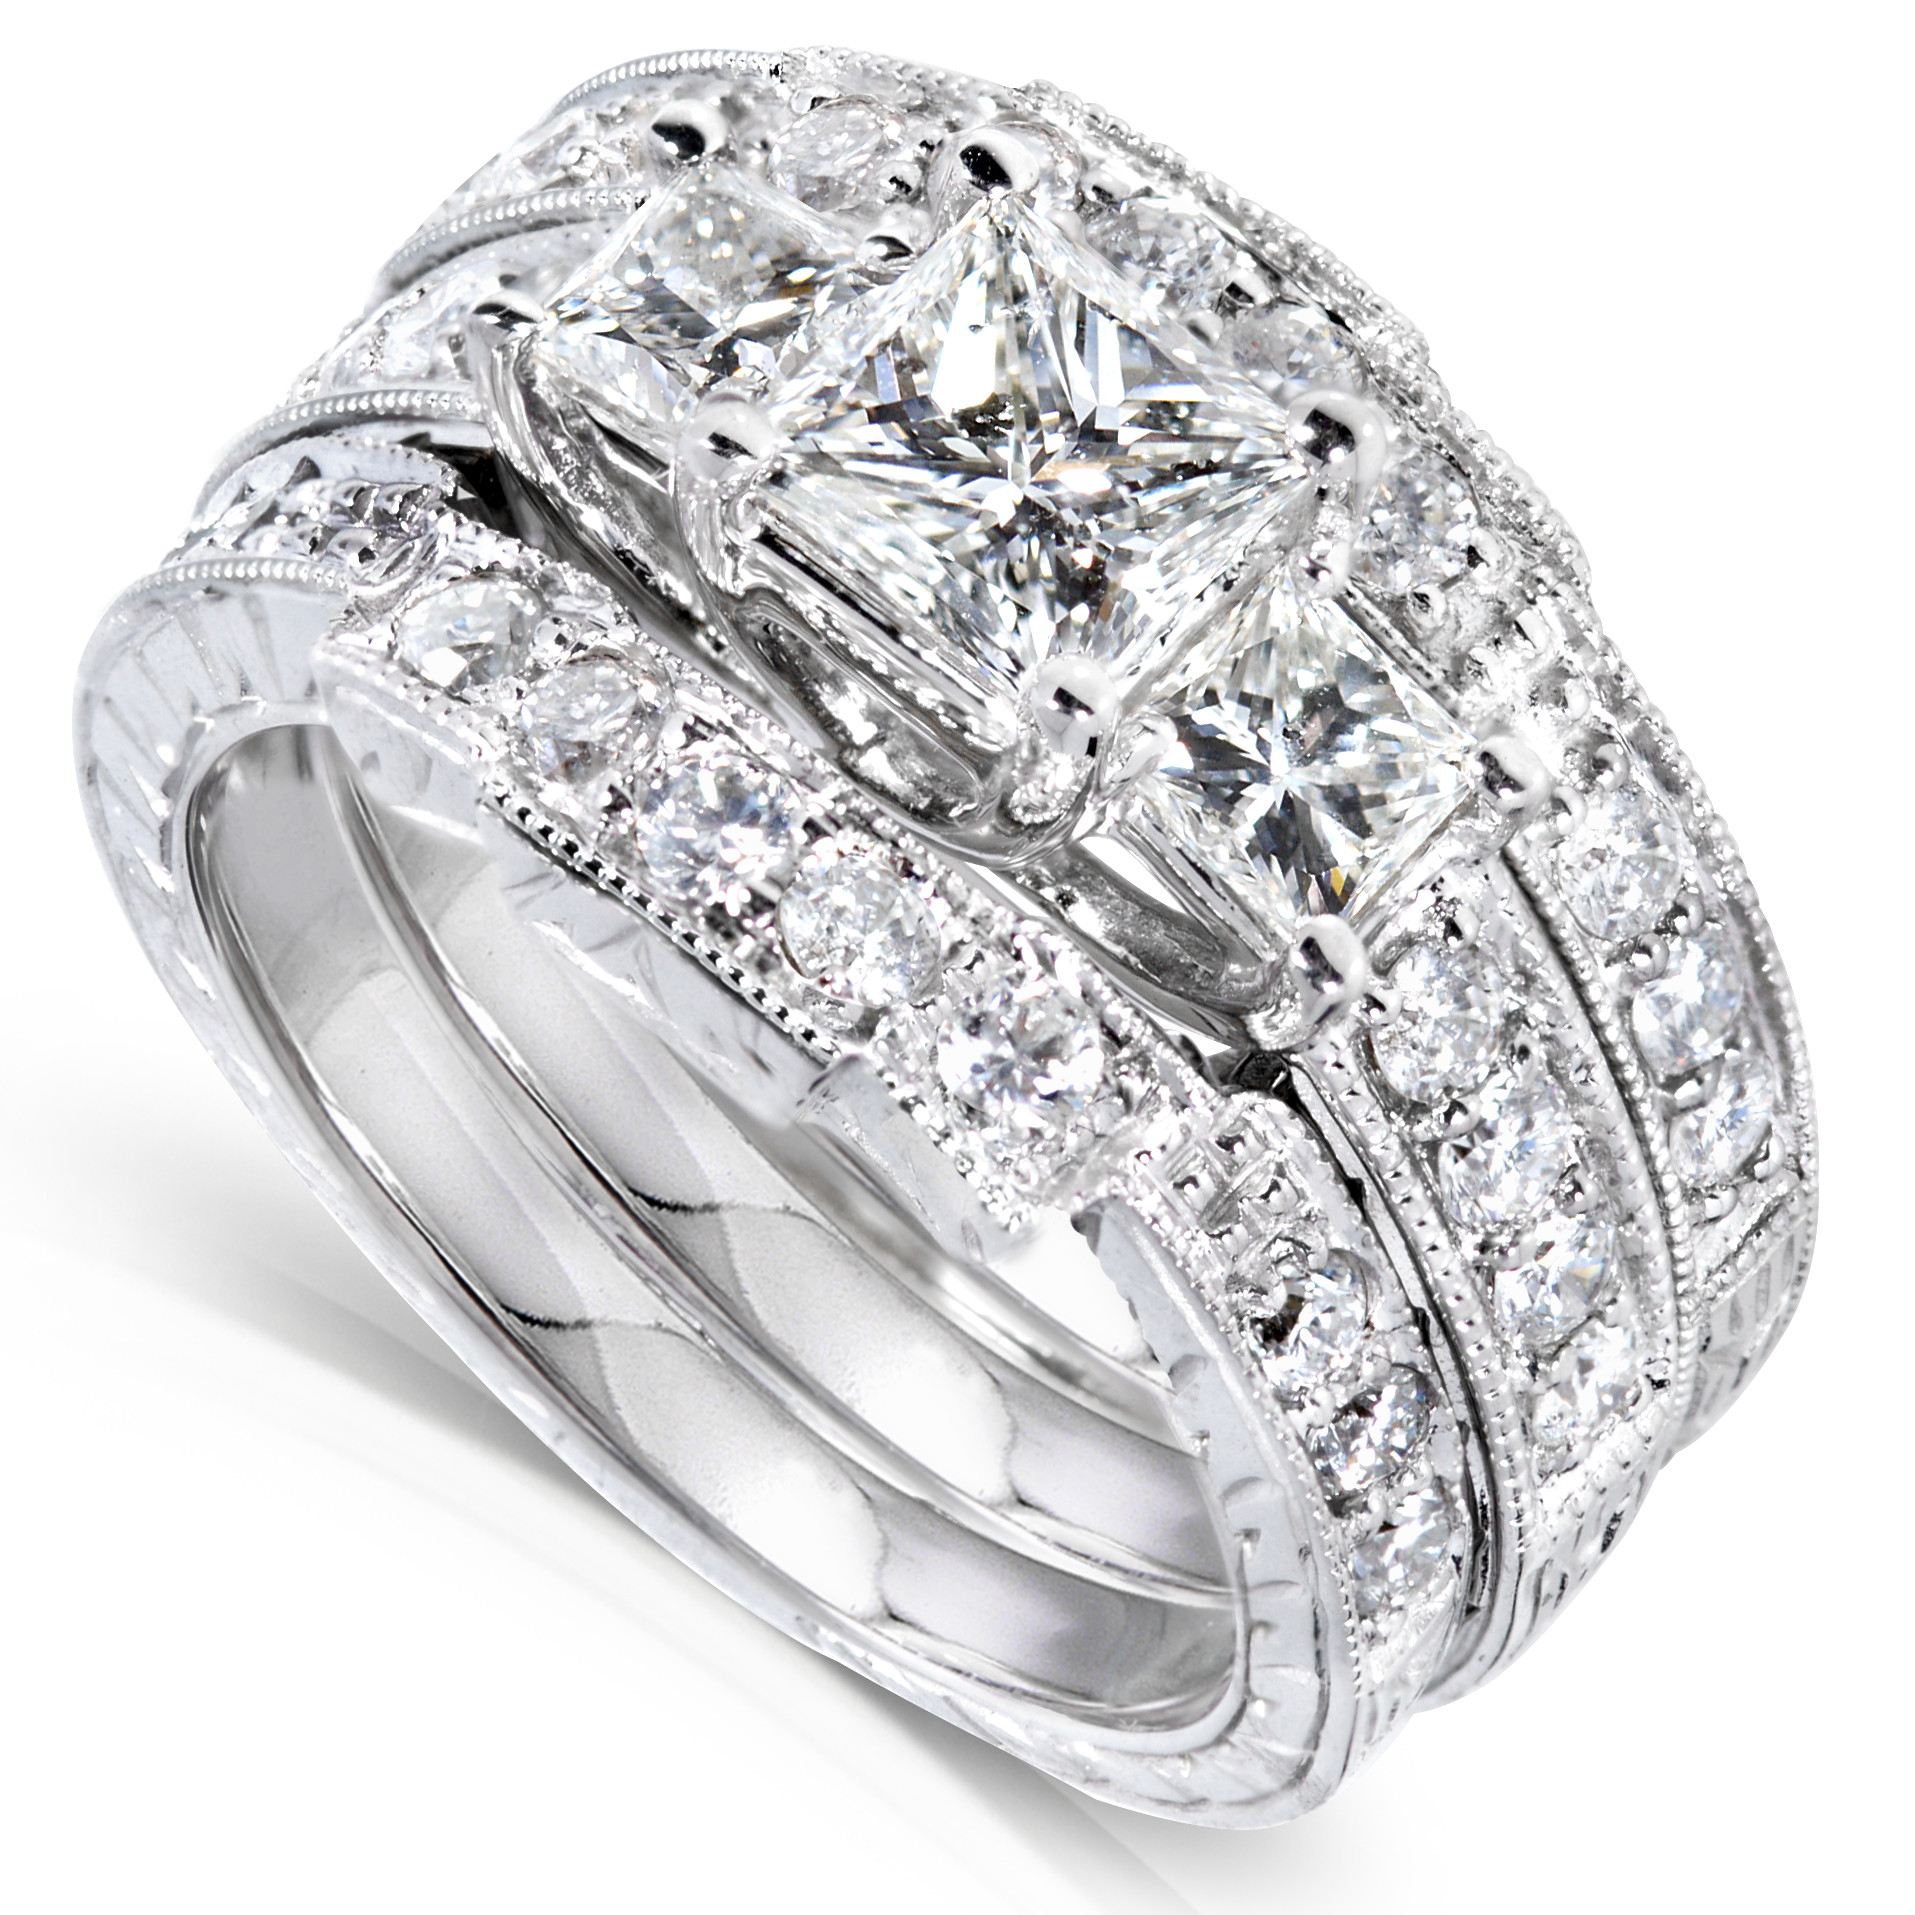 Kmart Wedding Ring Sets
 Diamond Me Princess Diamond Wedding Ring Set 1 7 8 carats